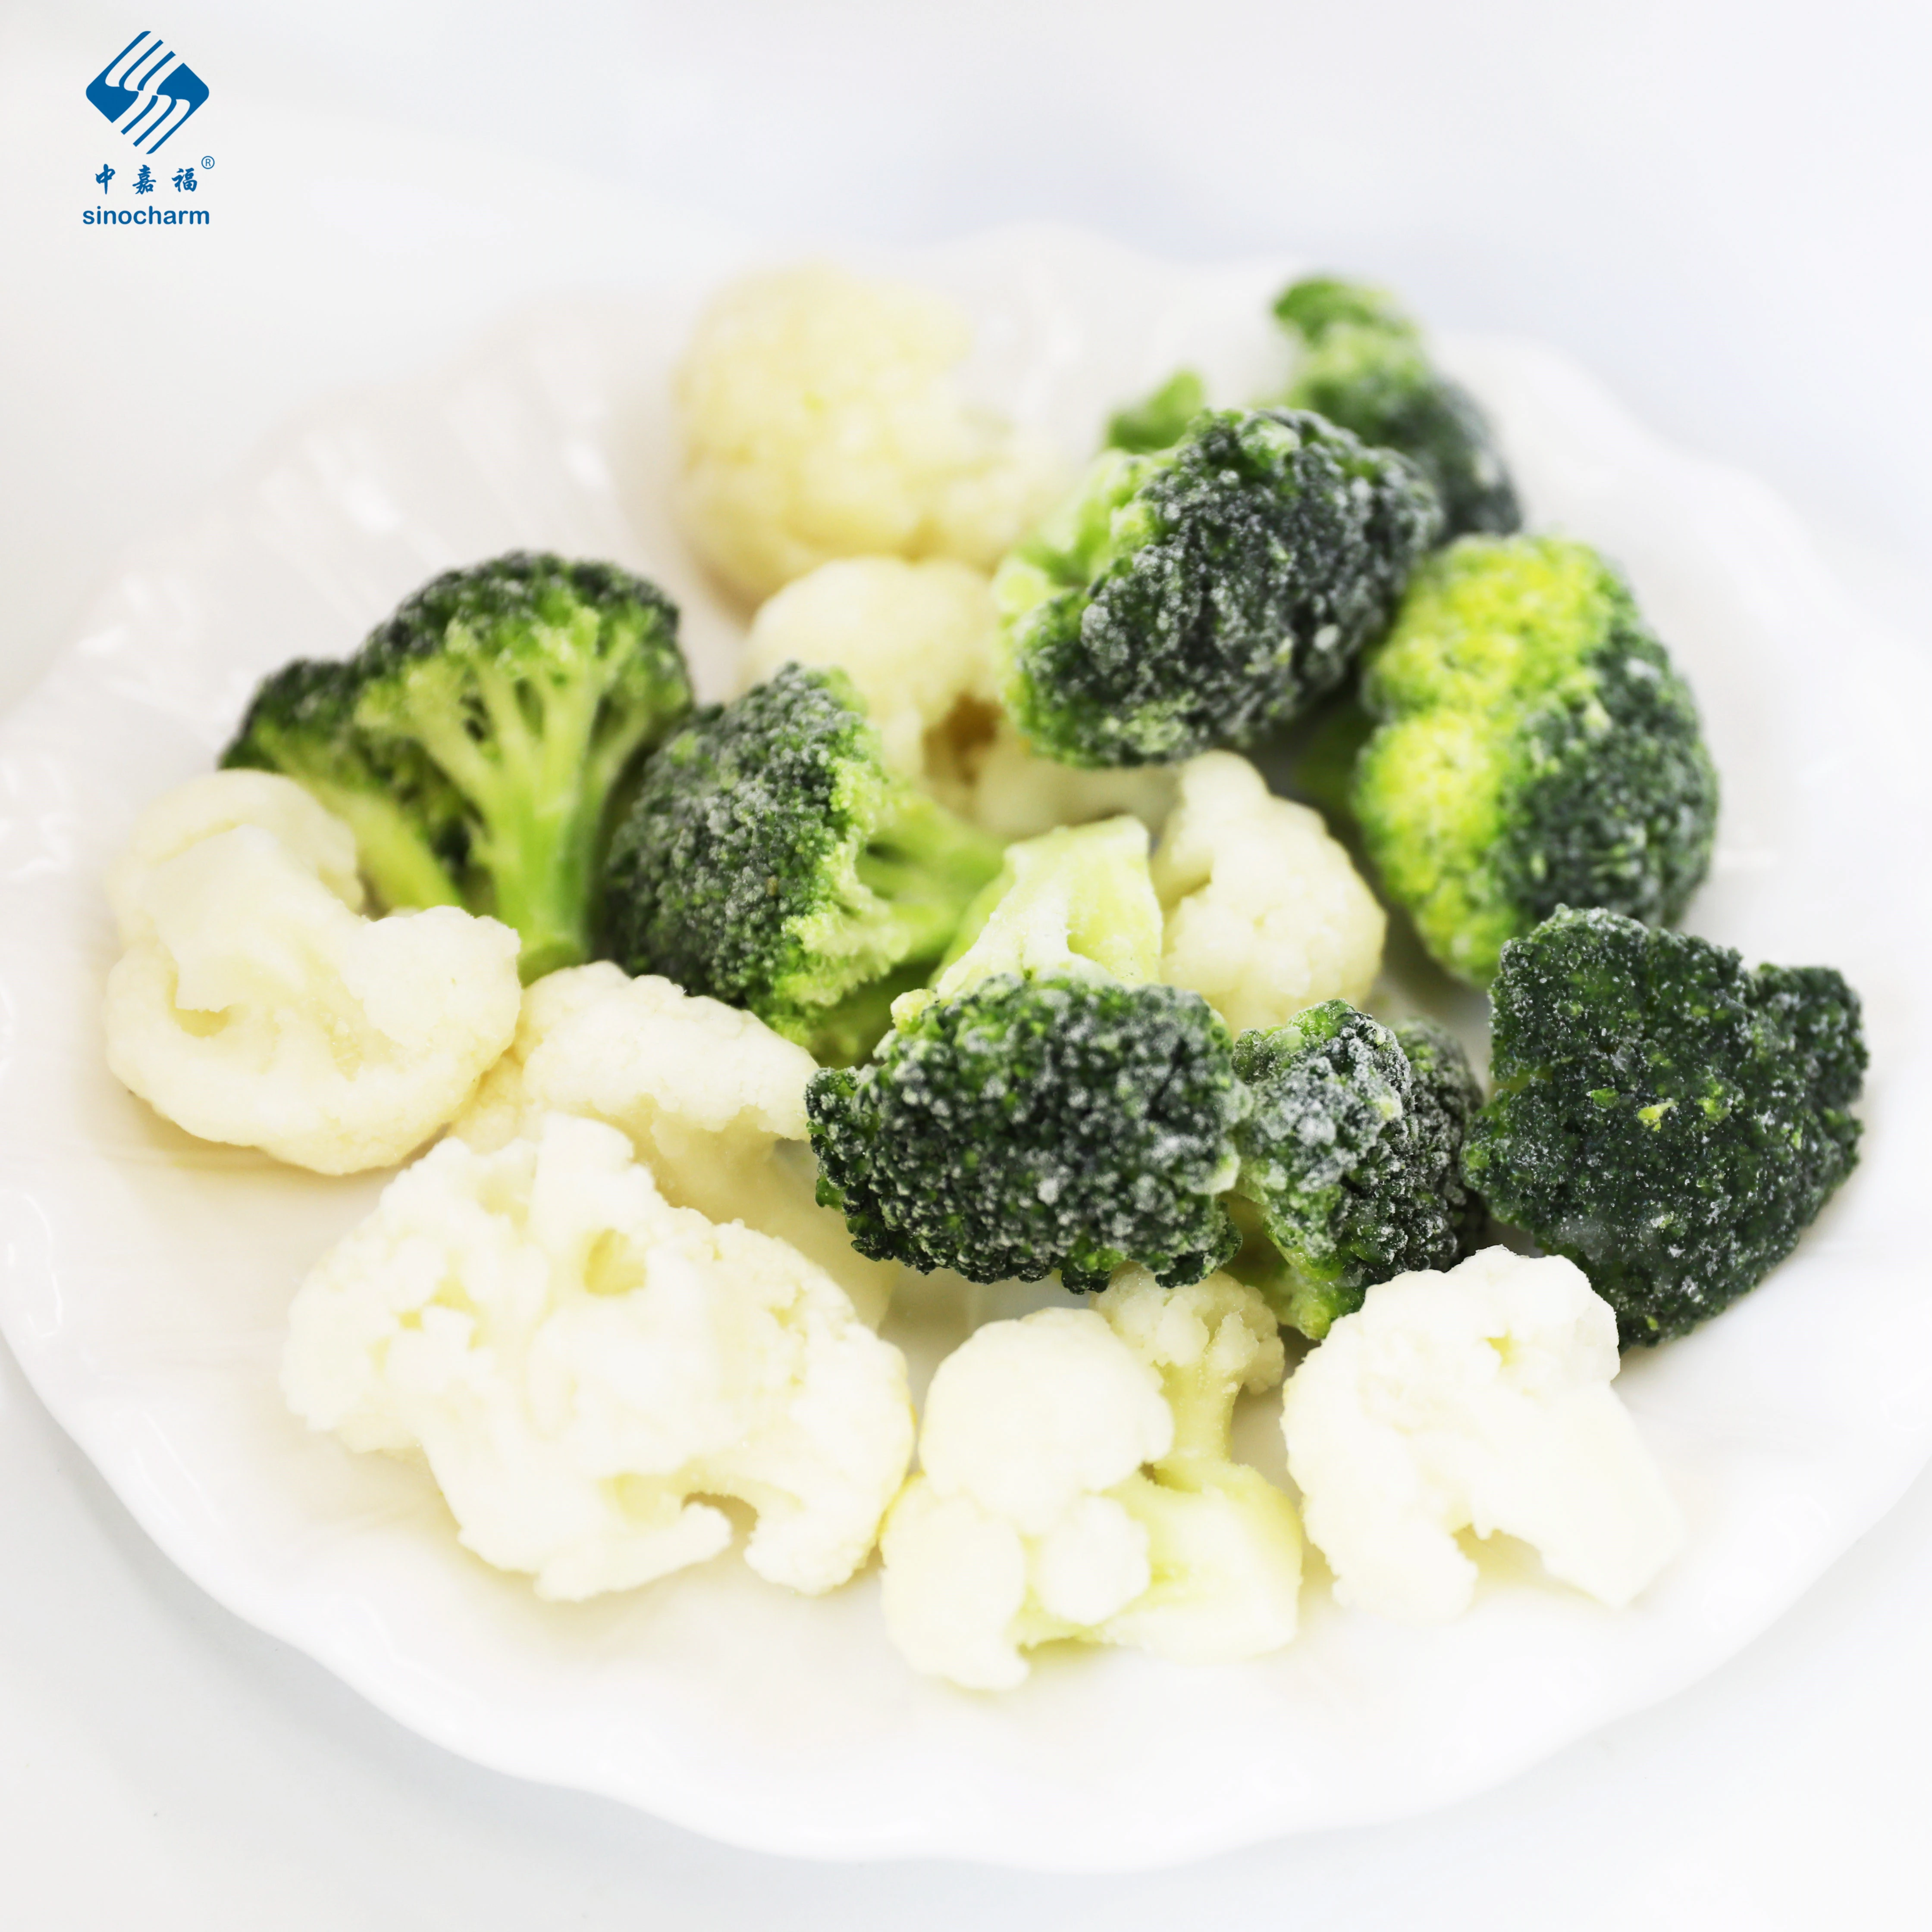 Frozen IQF Mixed Vegetables Broccoli Cauliflower